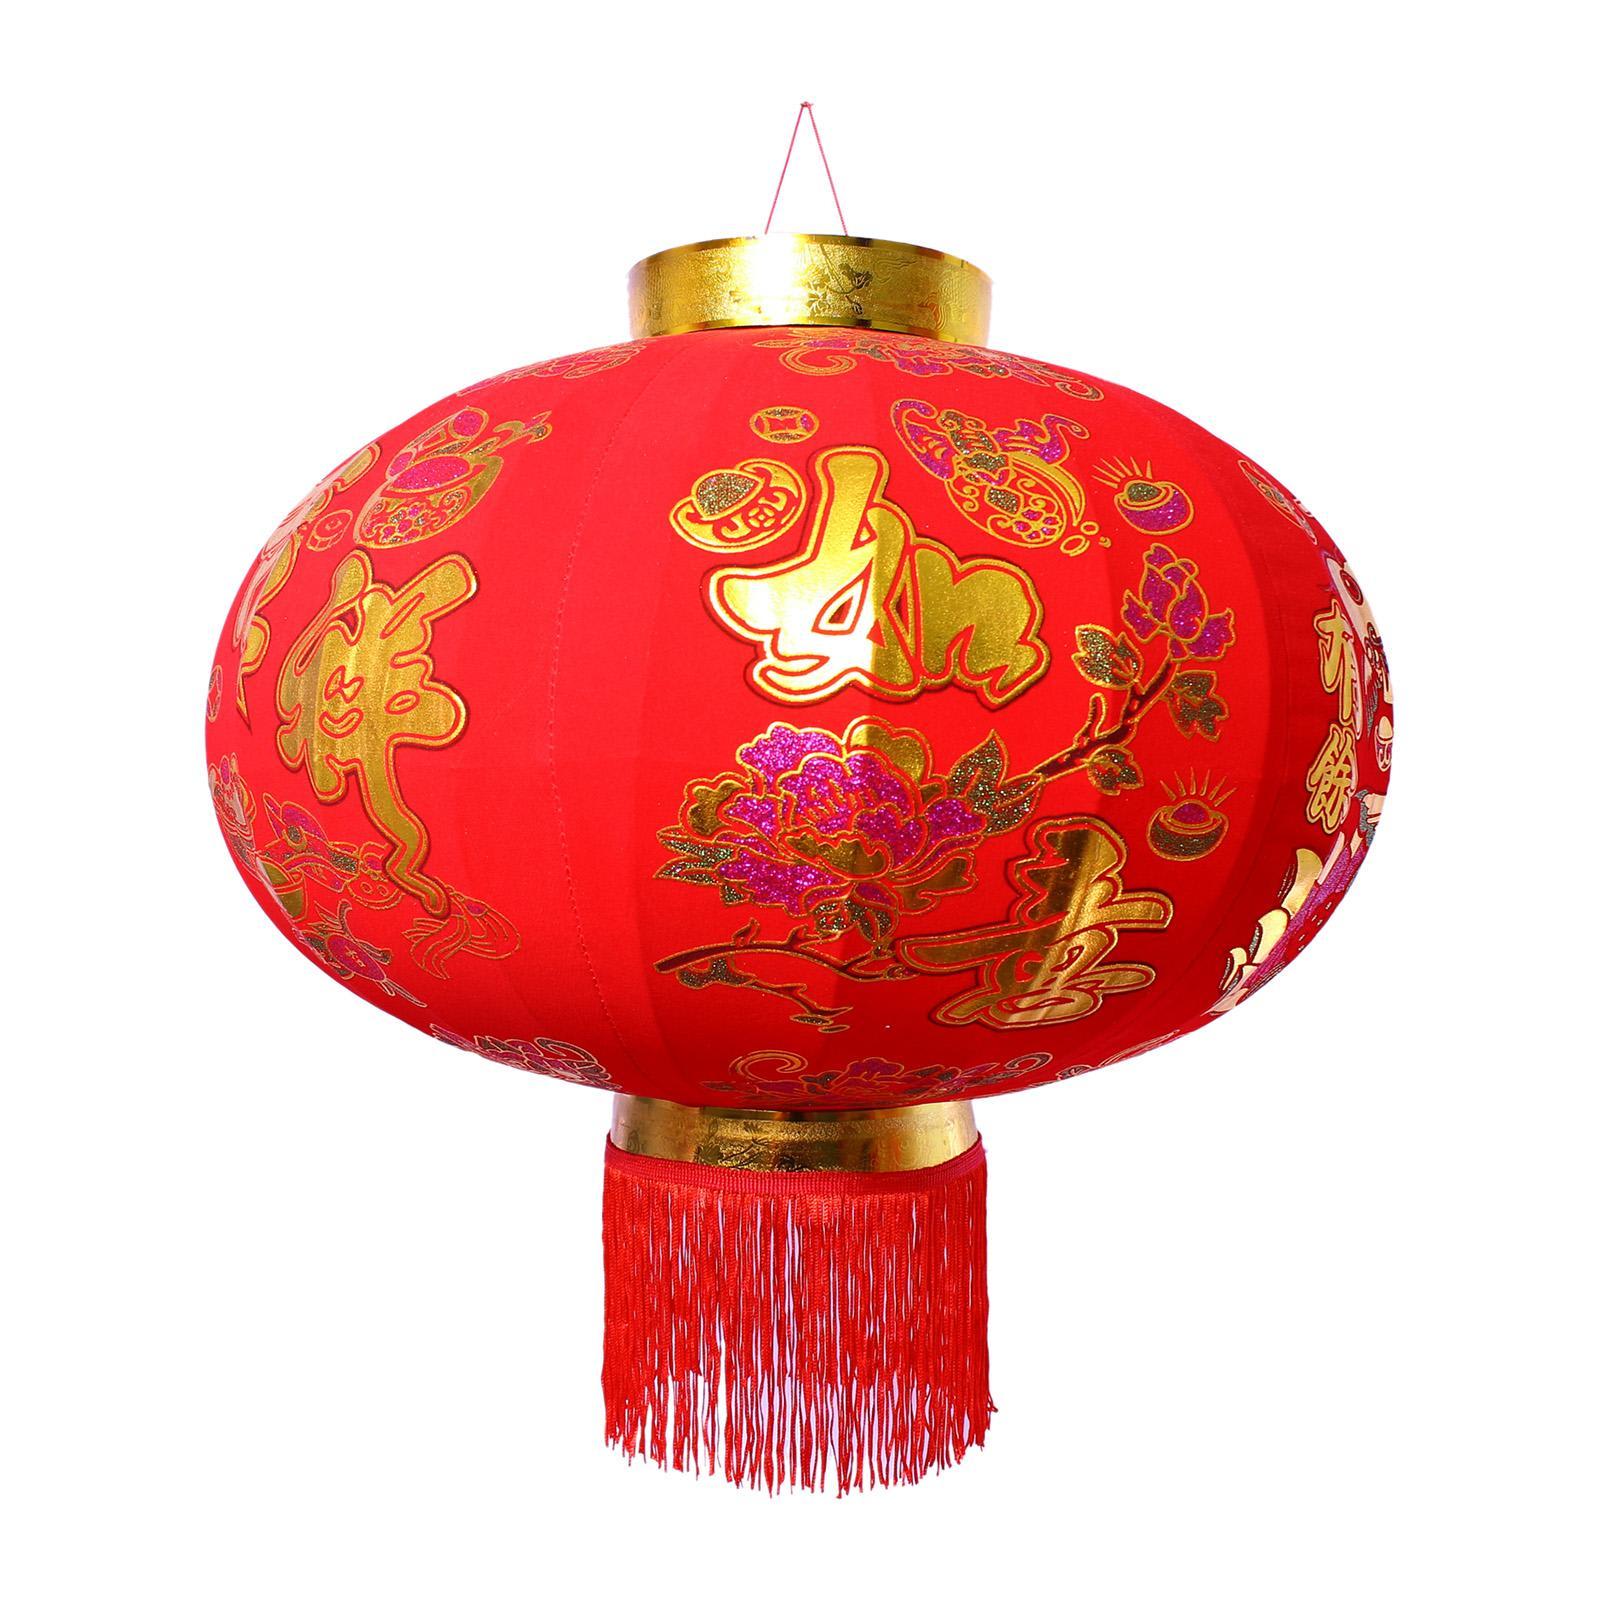 Chinese New Year Decorations Ideas Bathroom Ideas